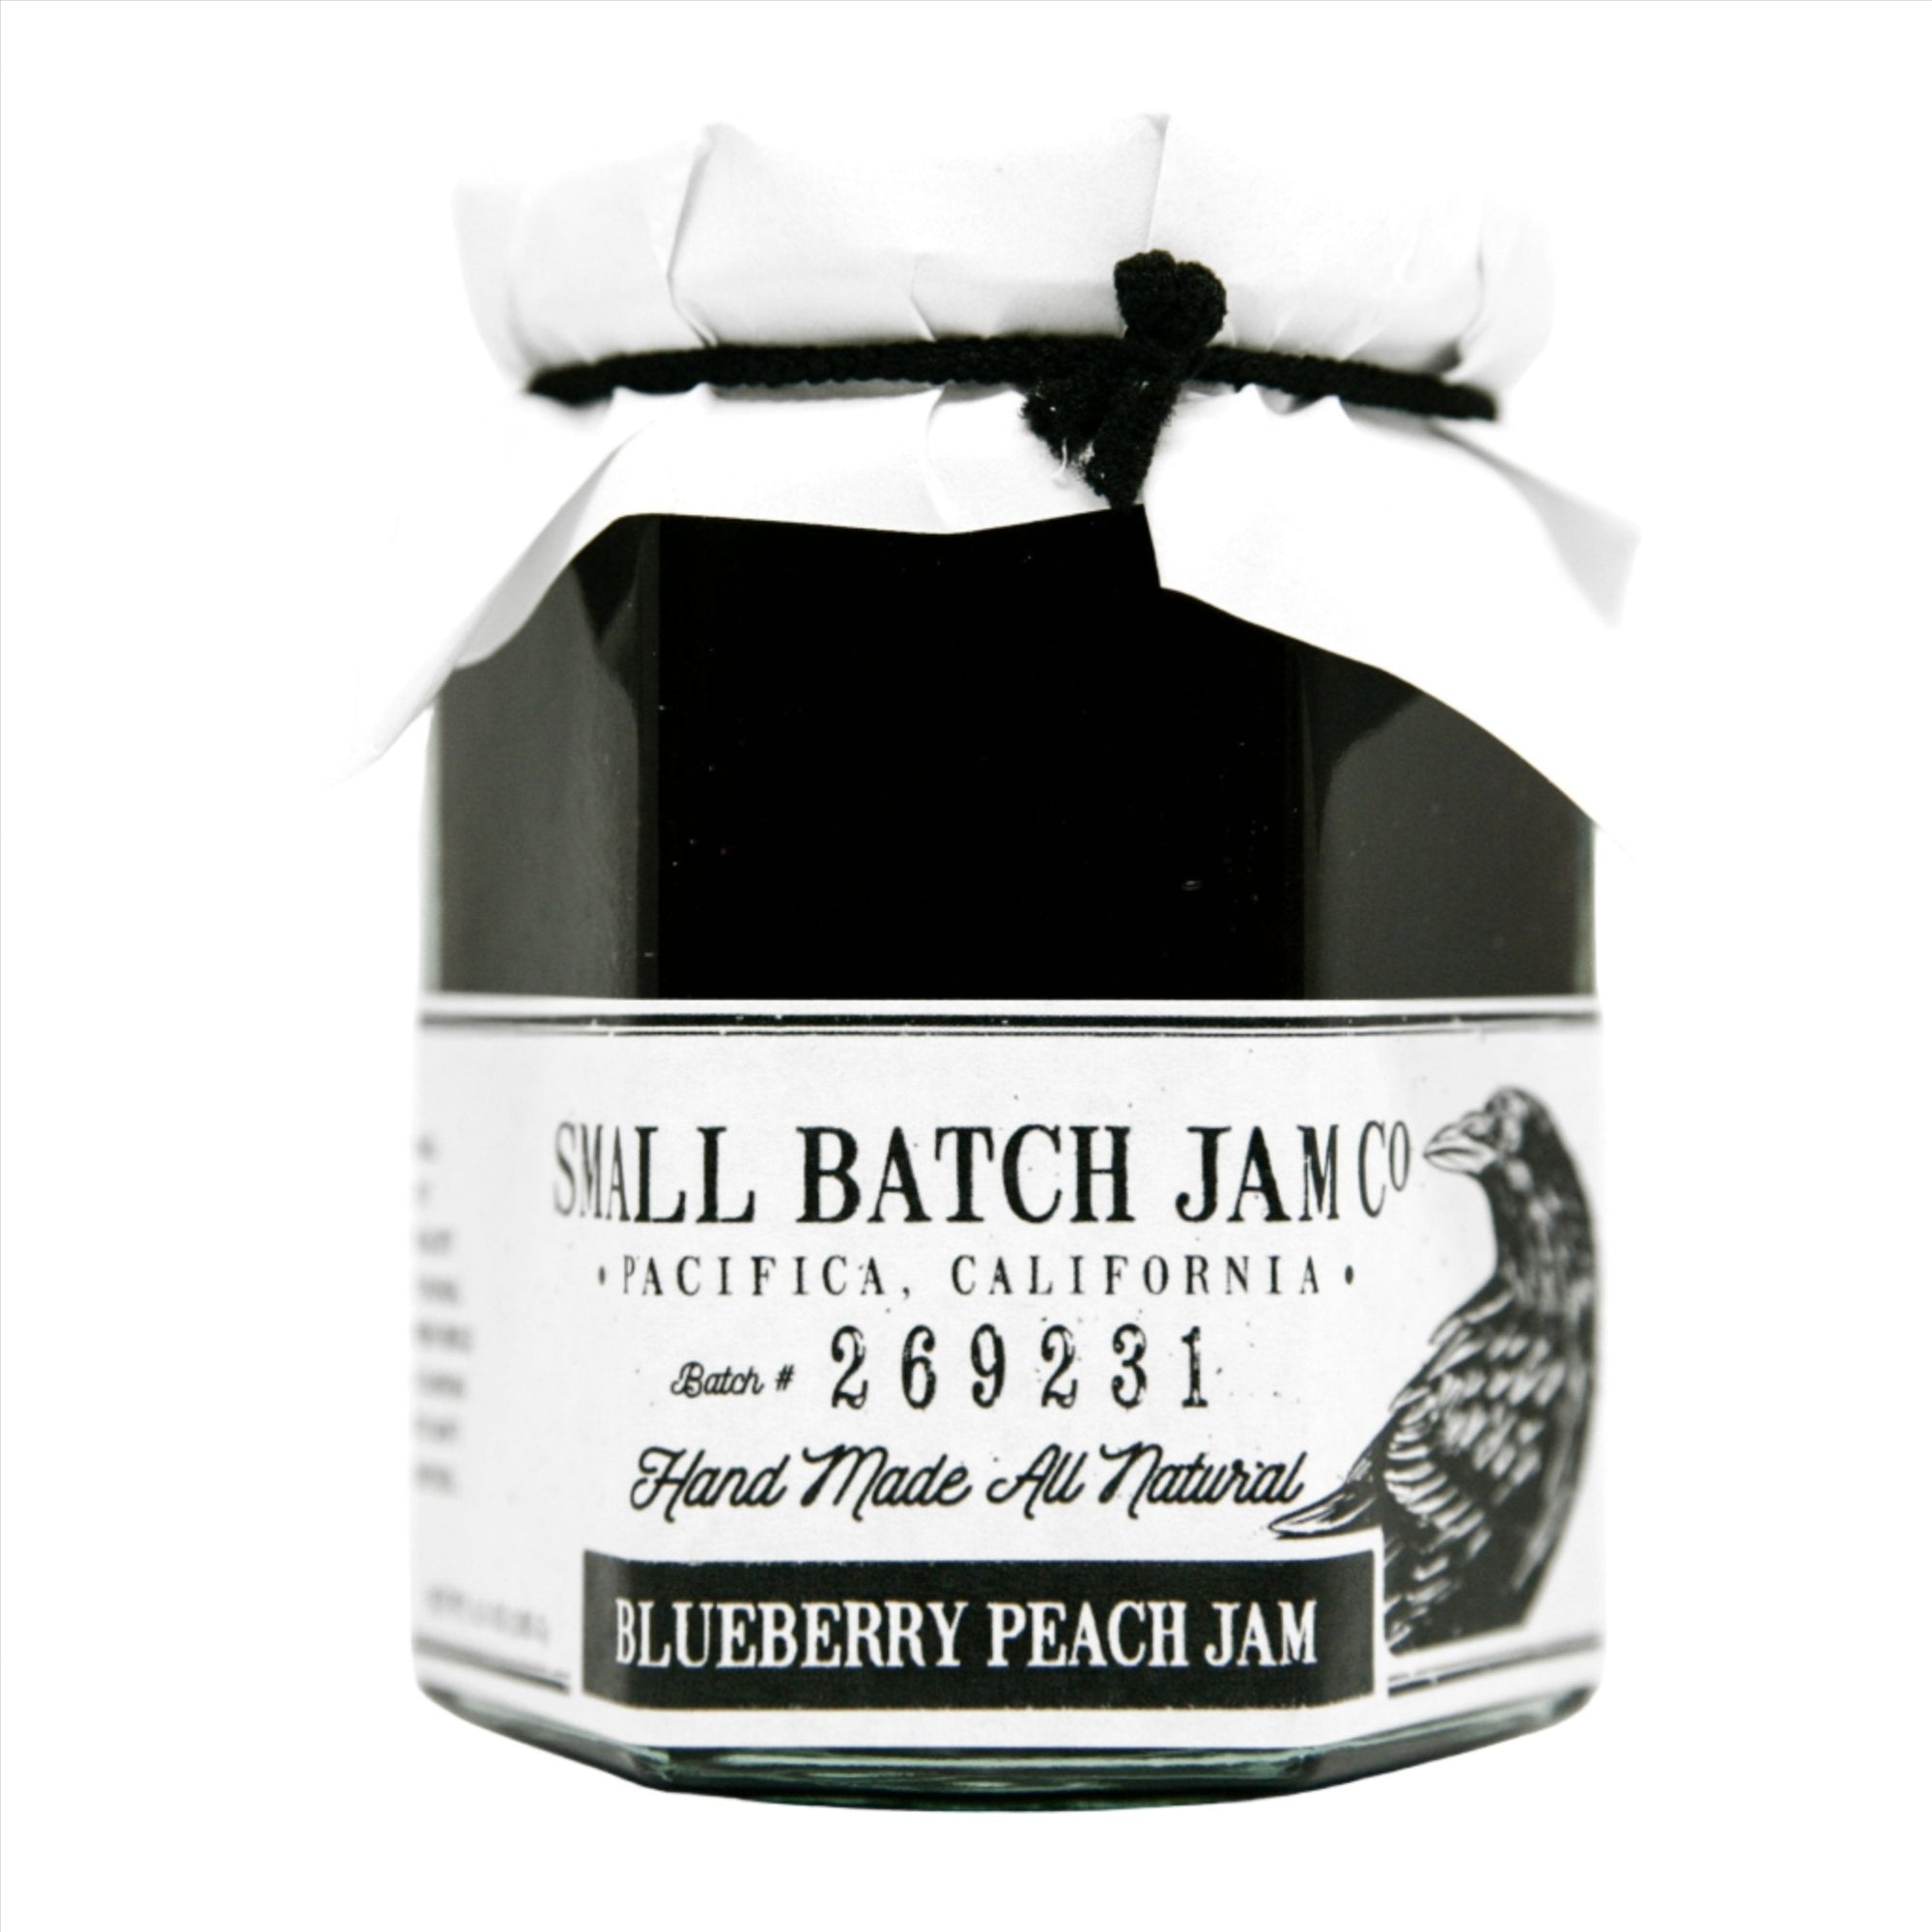 Blueberry Peach Jam - Small Batch Jam Co